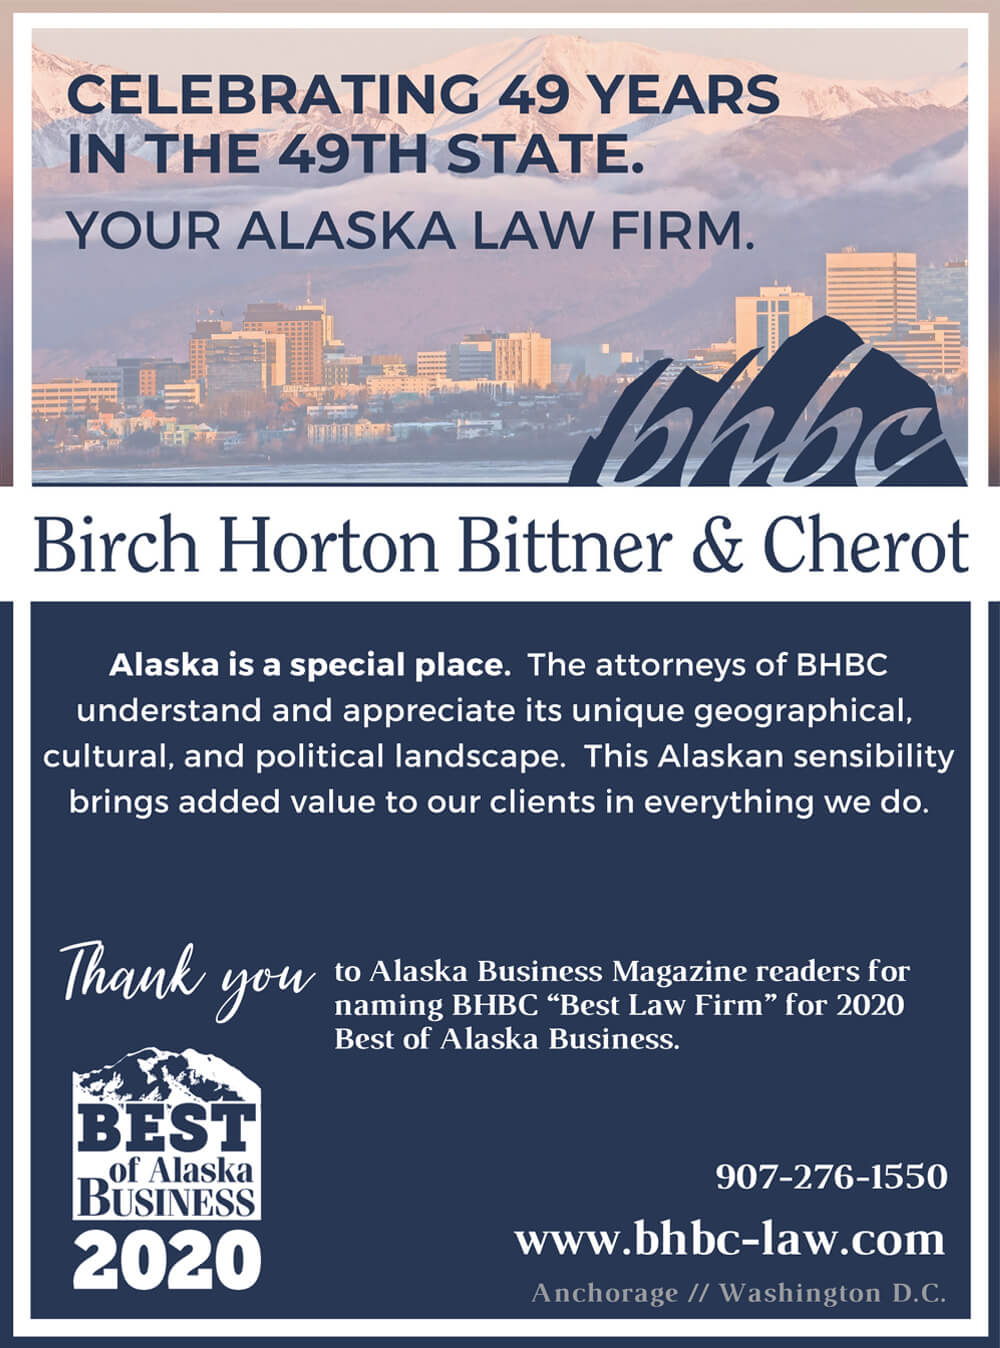 Birch Horton Bittner & Cherot Advertisement